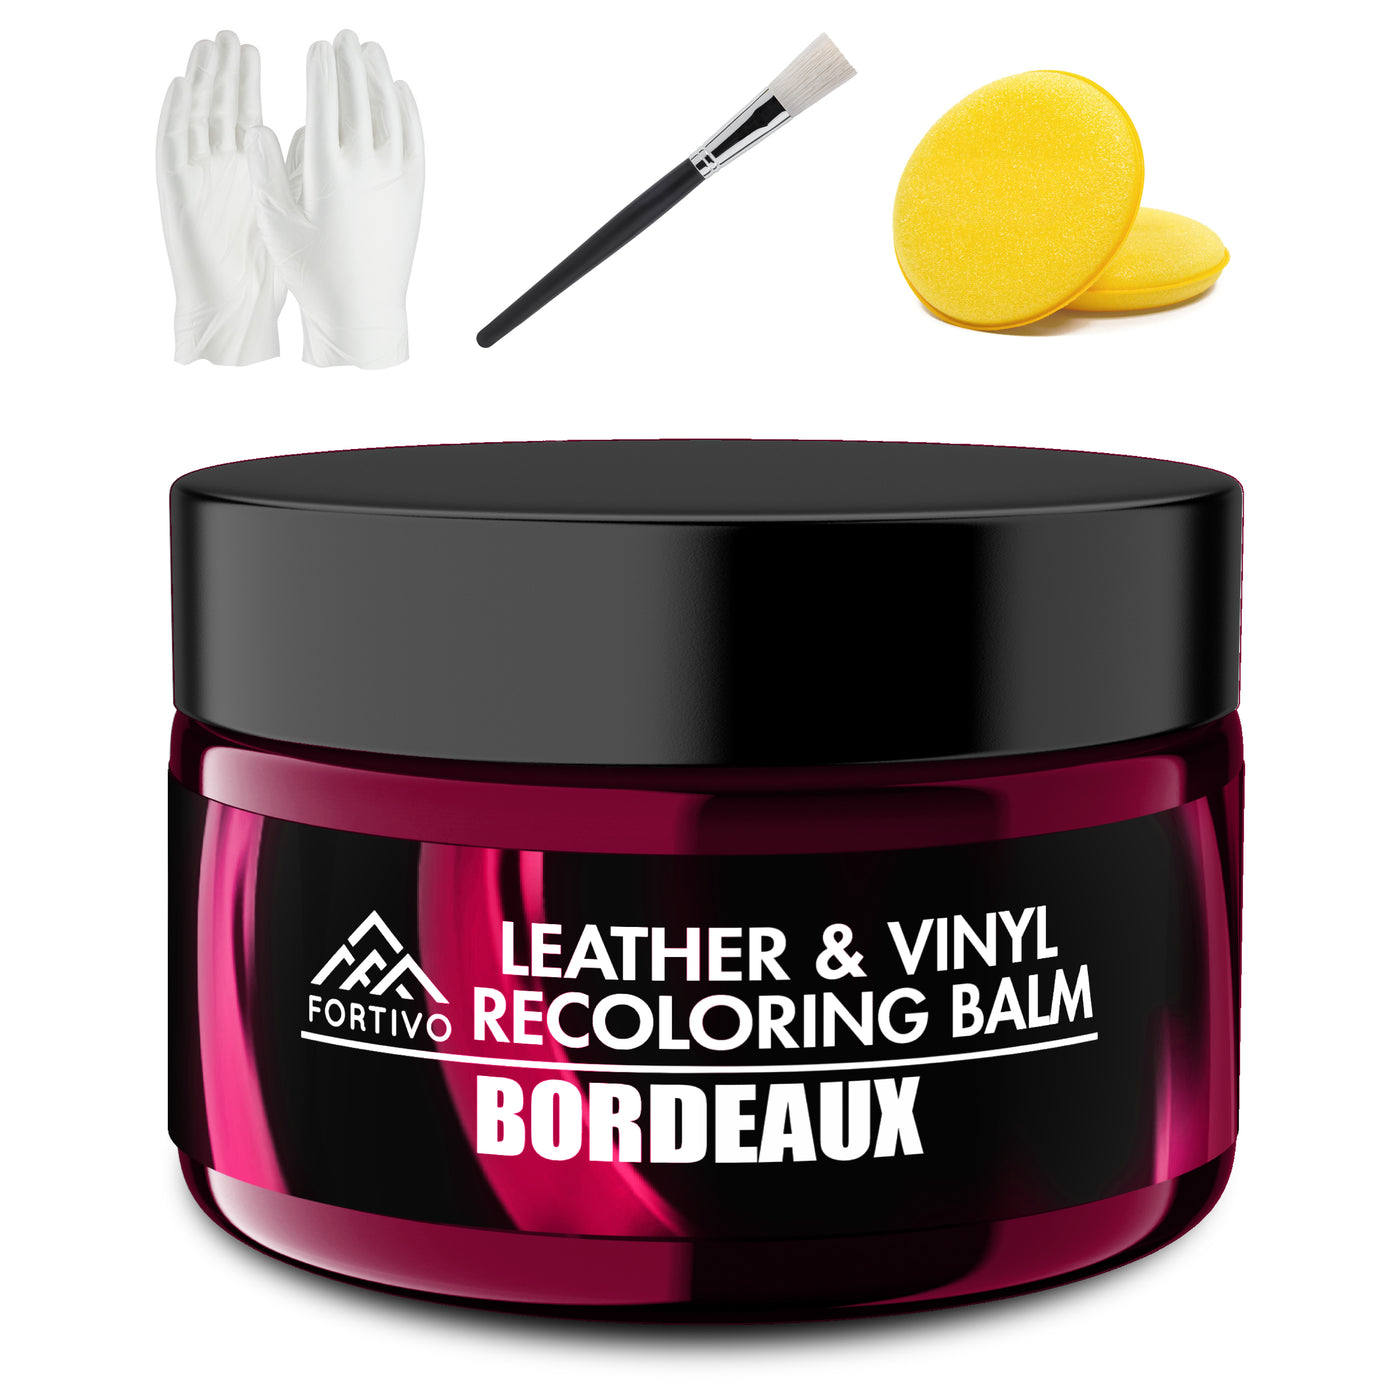 Bordeaux leather dye kit in white background